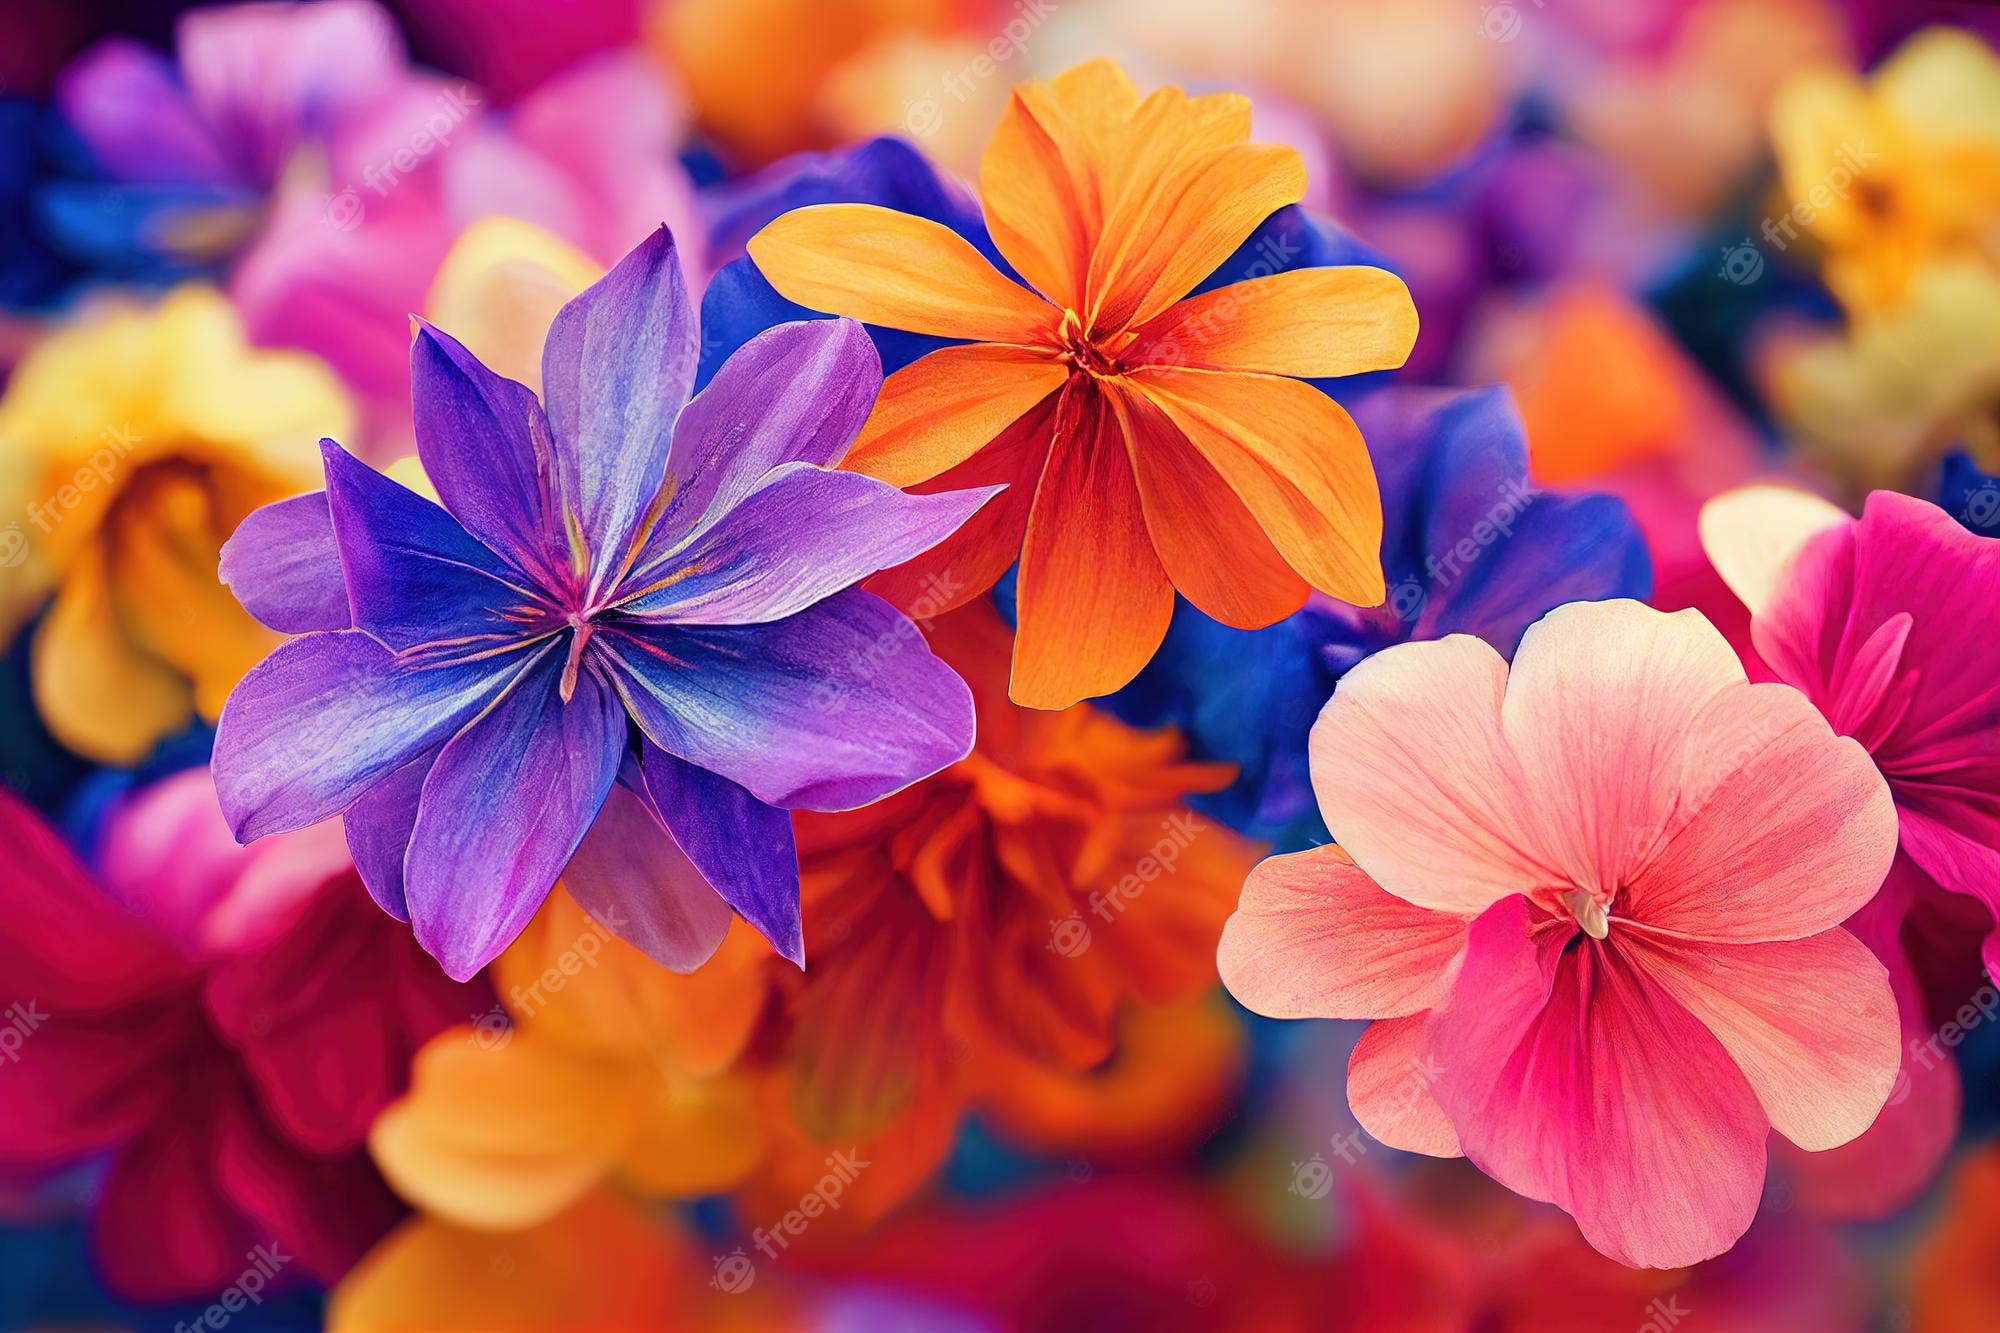 Bright Flowers Image